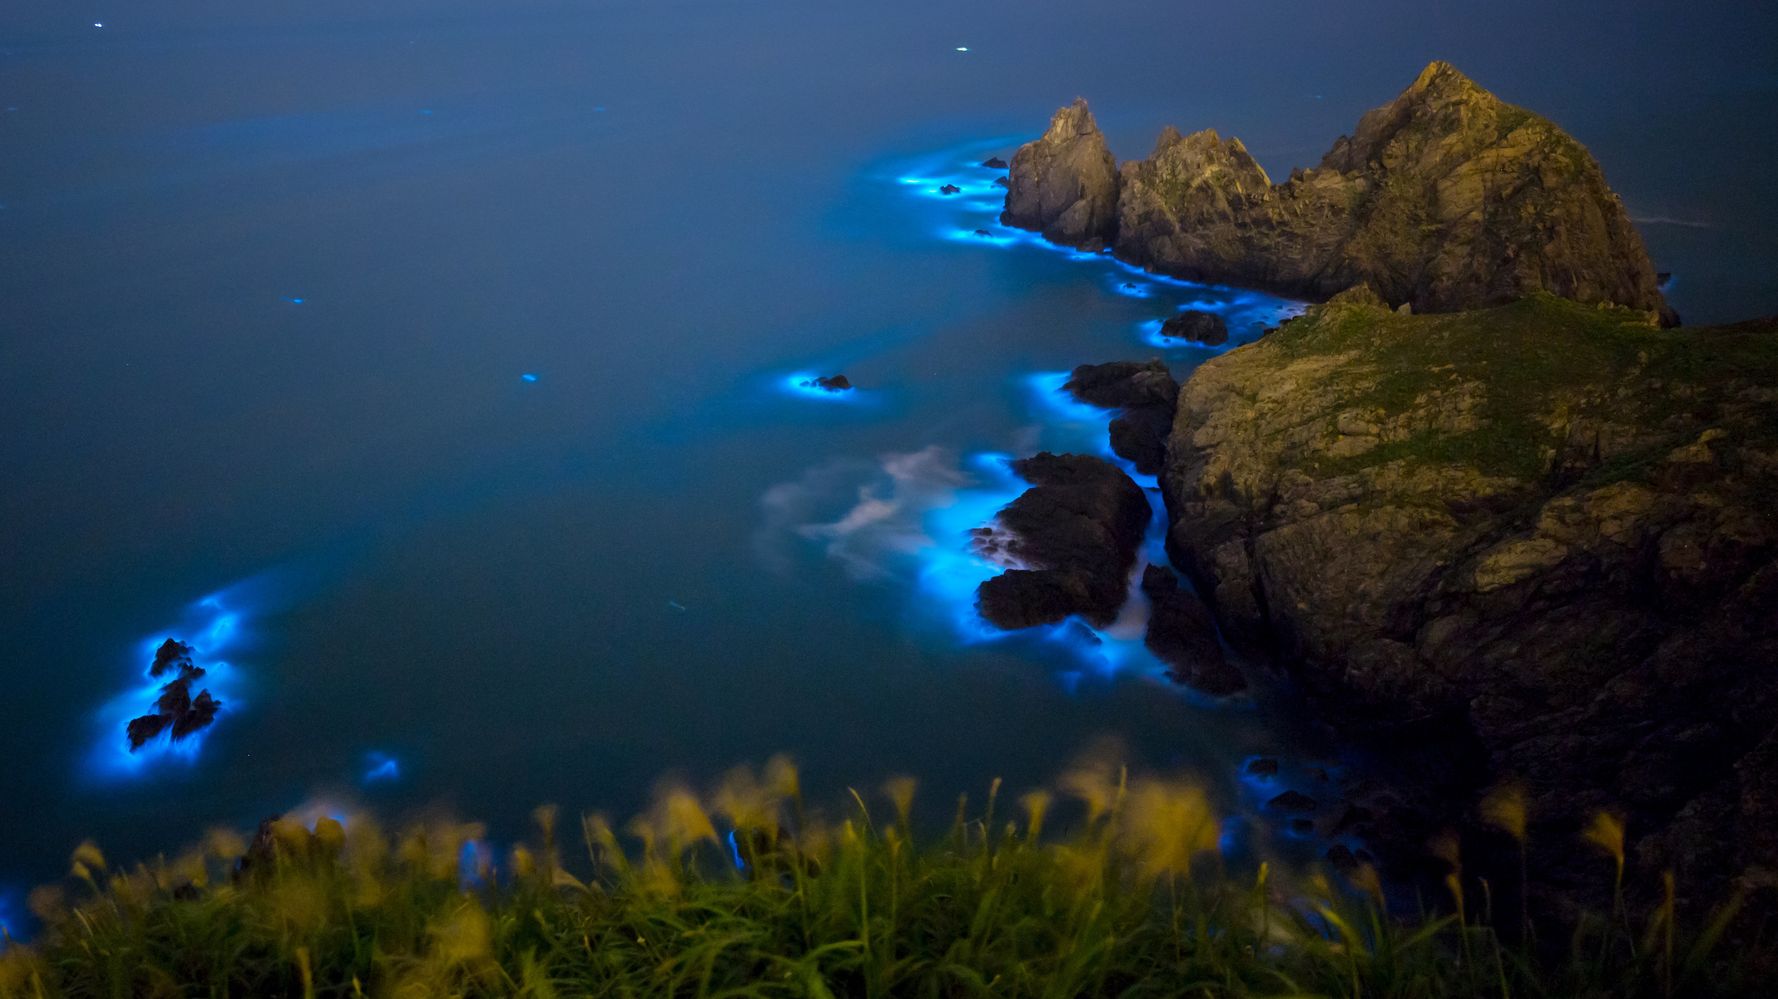 Bioluminescent algae photo not harmful: professor - Taipei Times